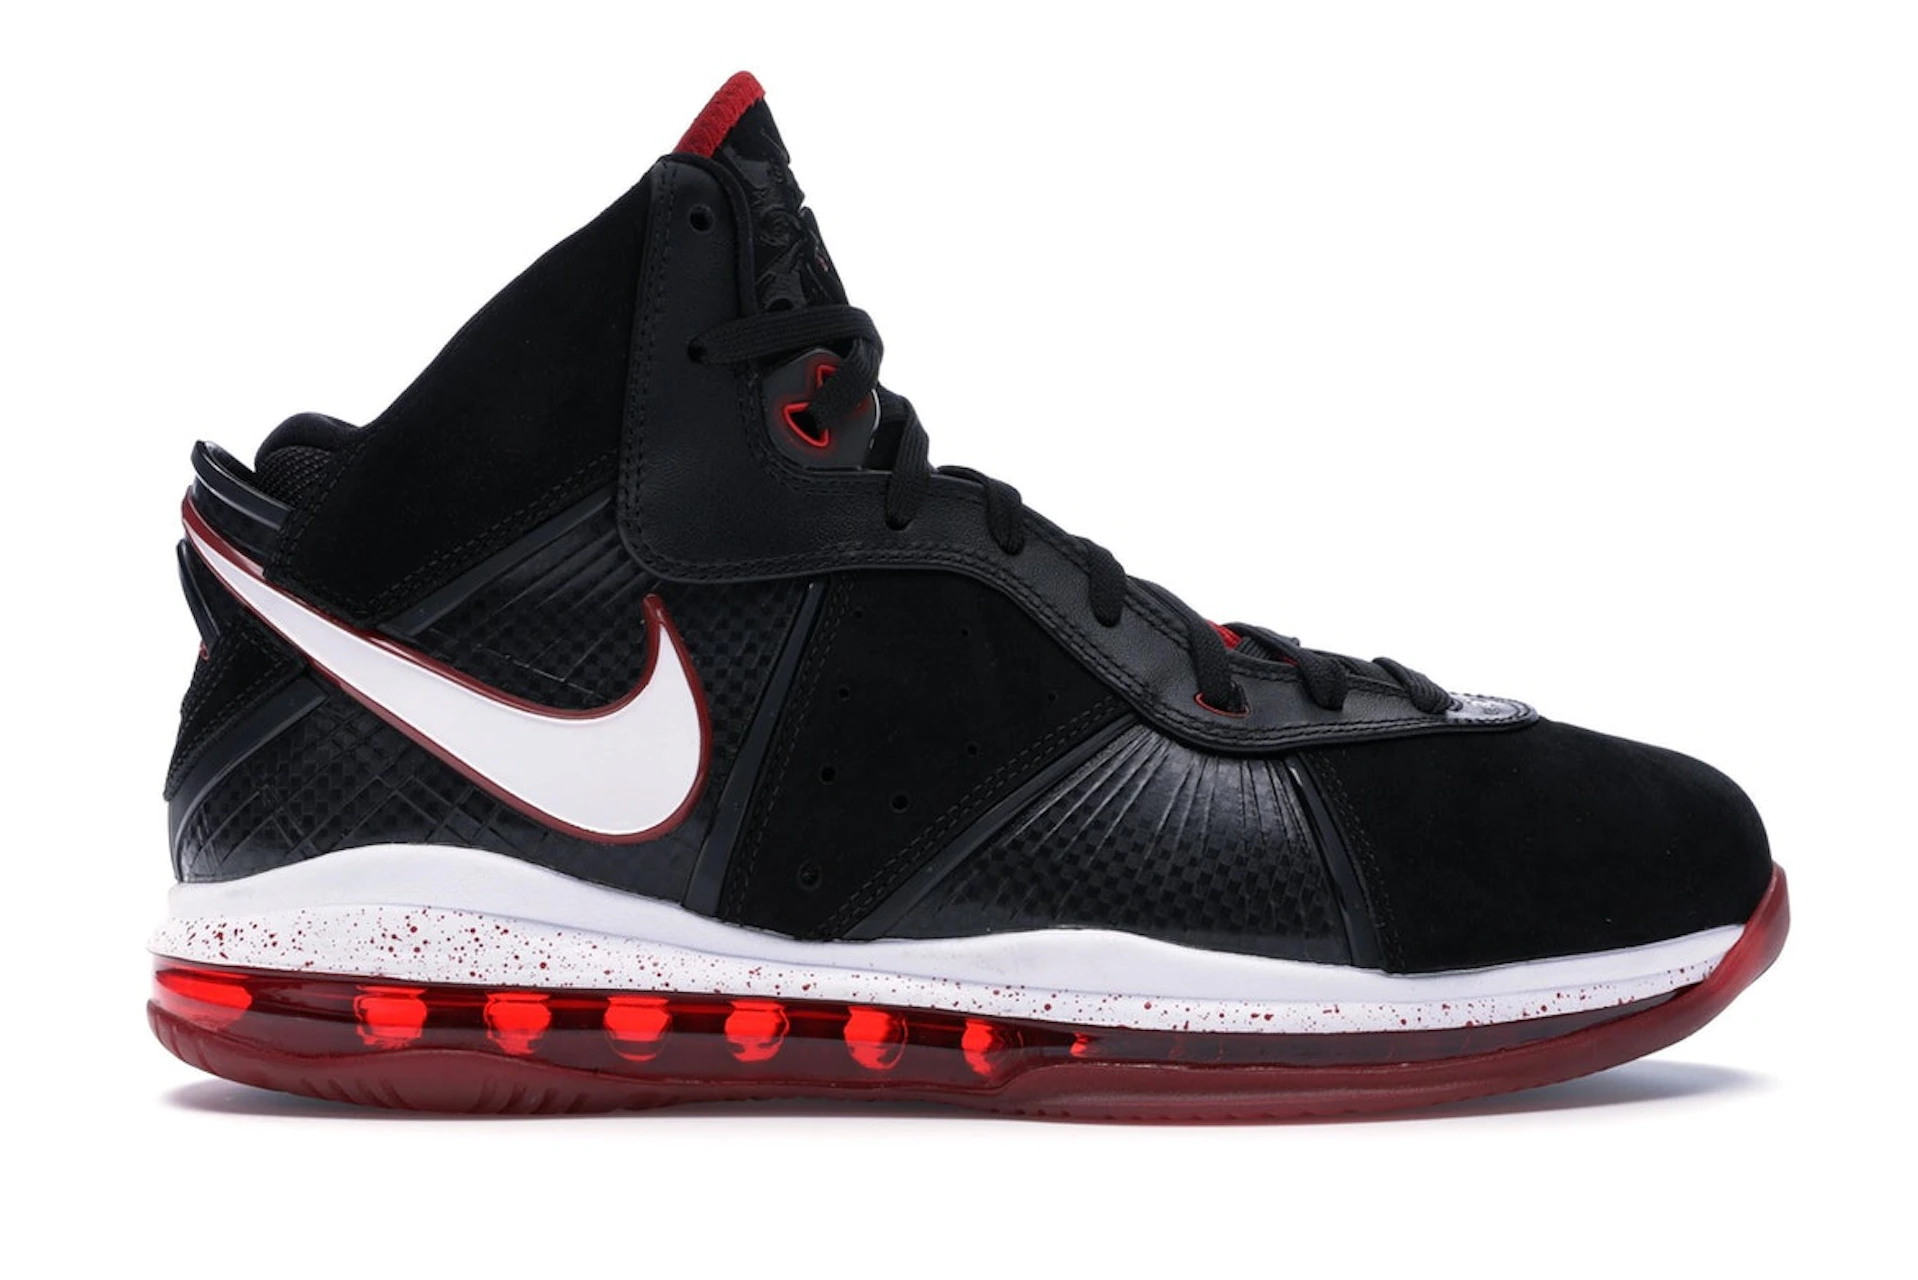 Nike LeBron 8 Black/White/Red - 417098-002